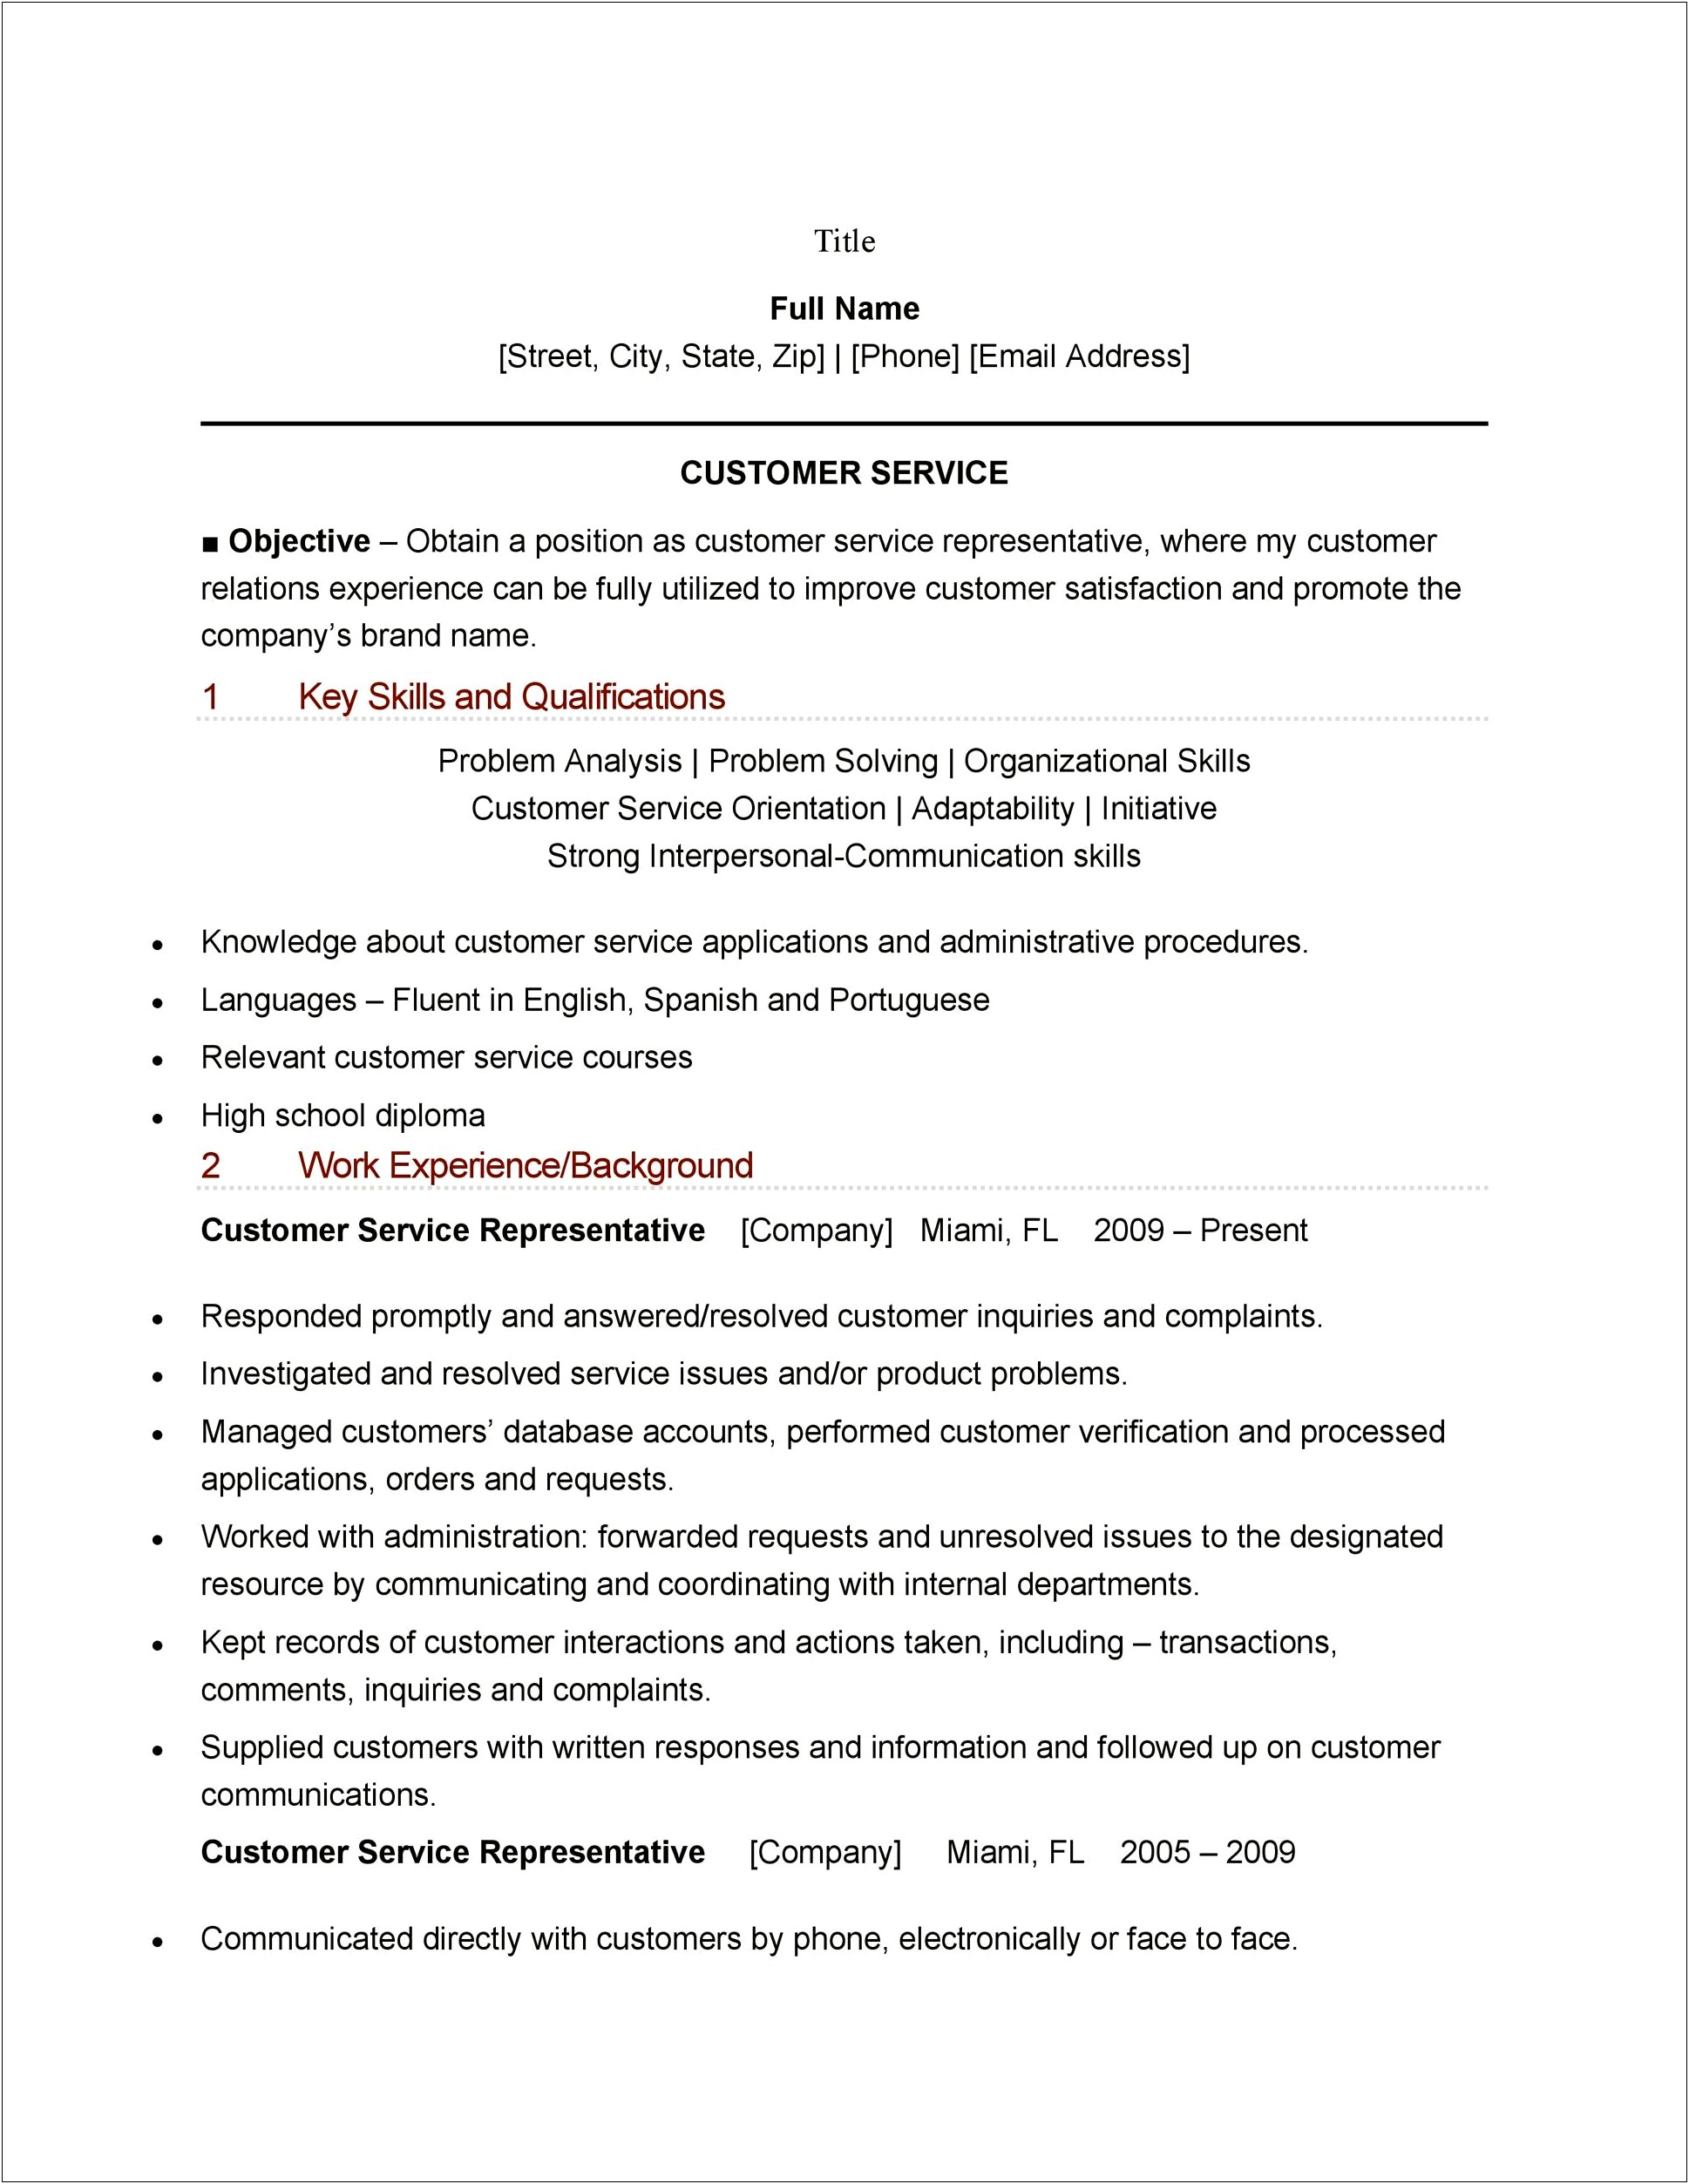 Customer Service Representative Job Objective Resume